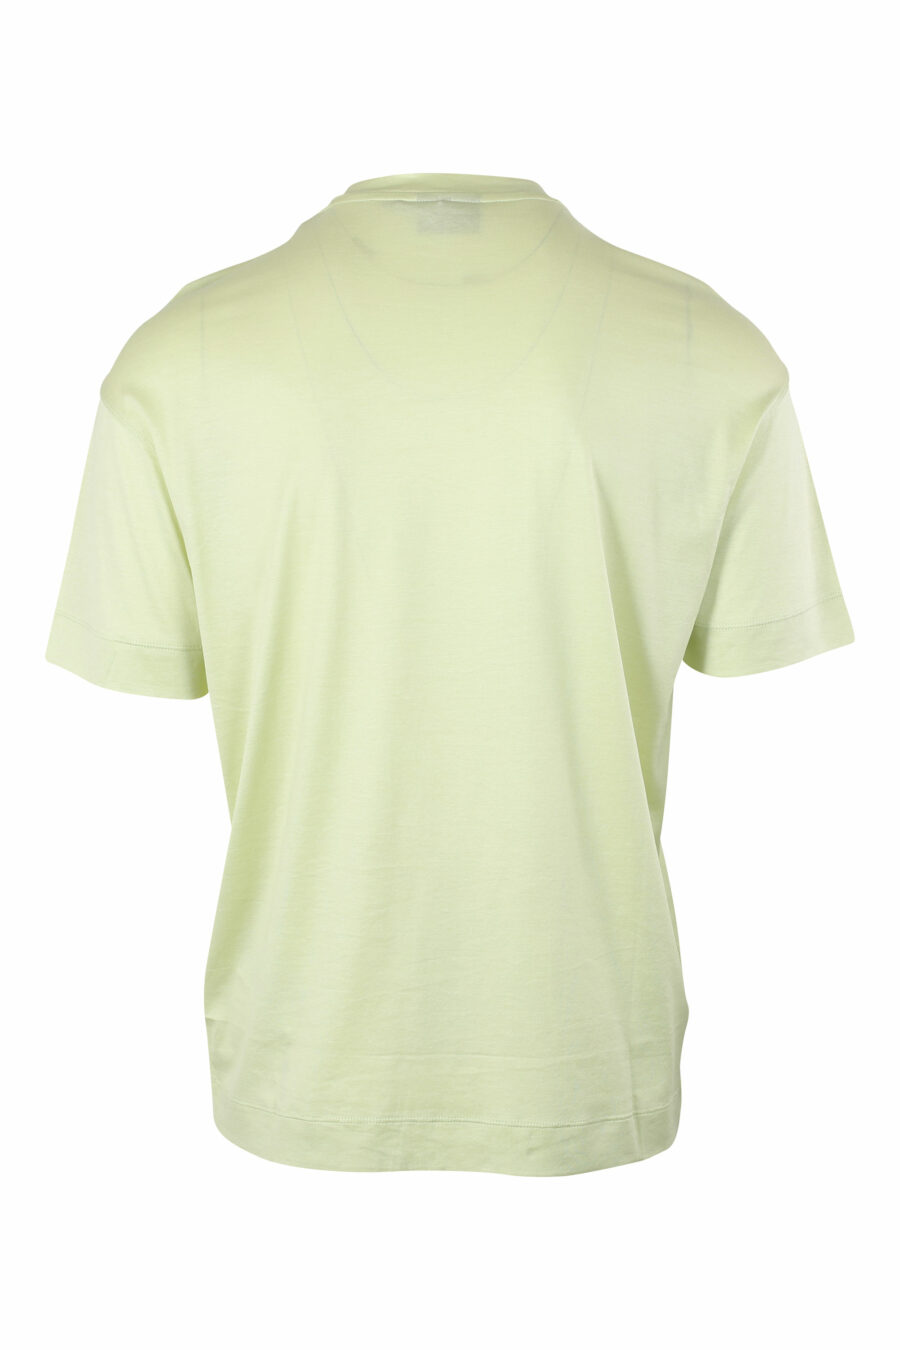 Green T-shirt with centred maxilogo - IMG 9630